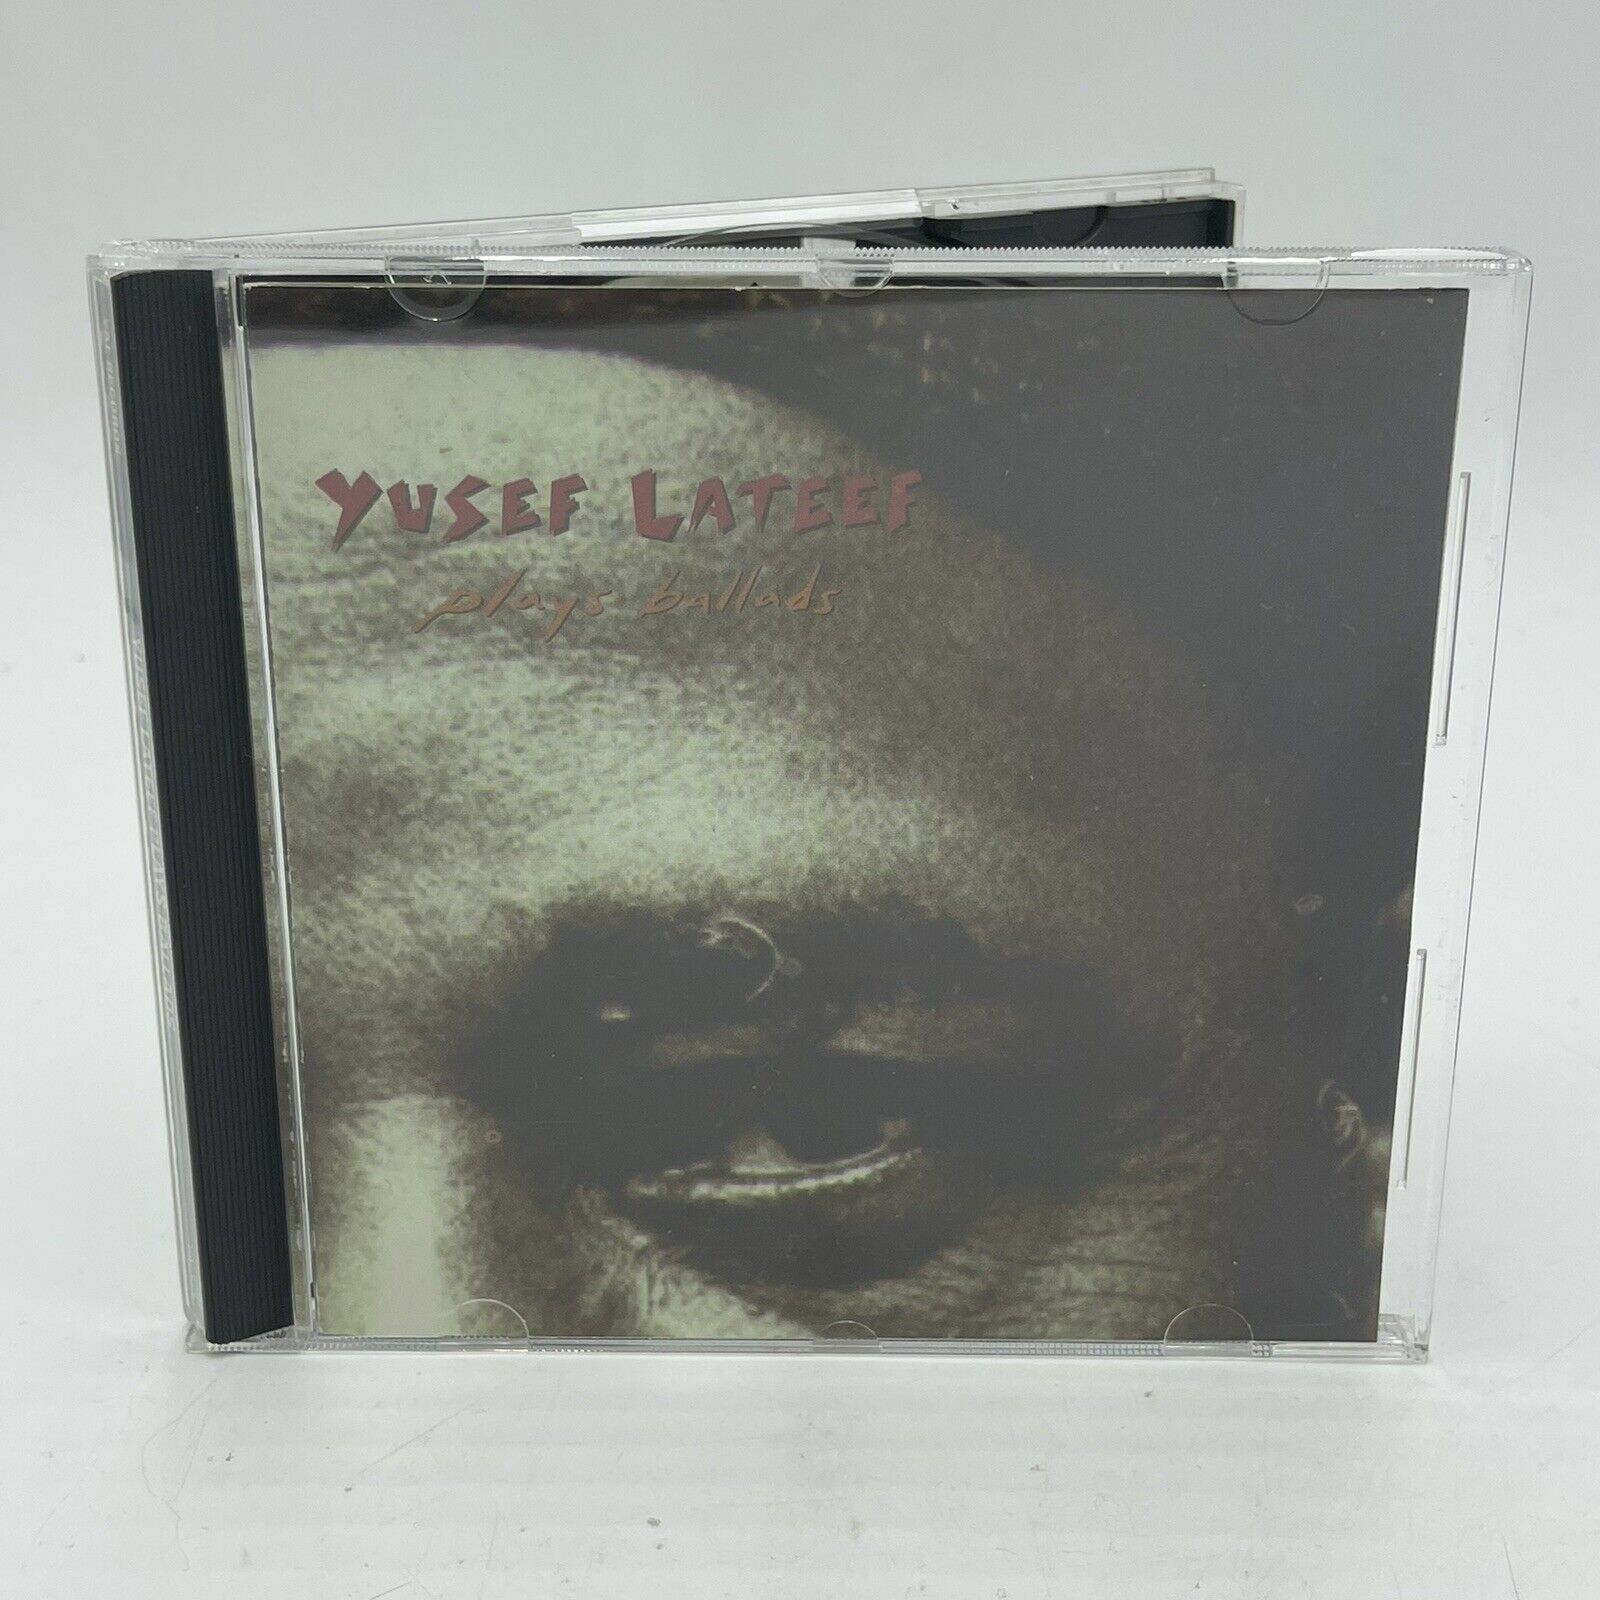 YUSEF LATEEF - Yusef Lateef Plays Ballads - CD -